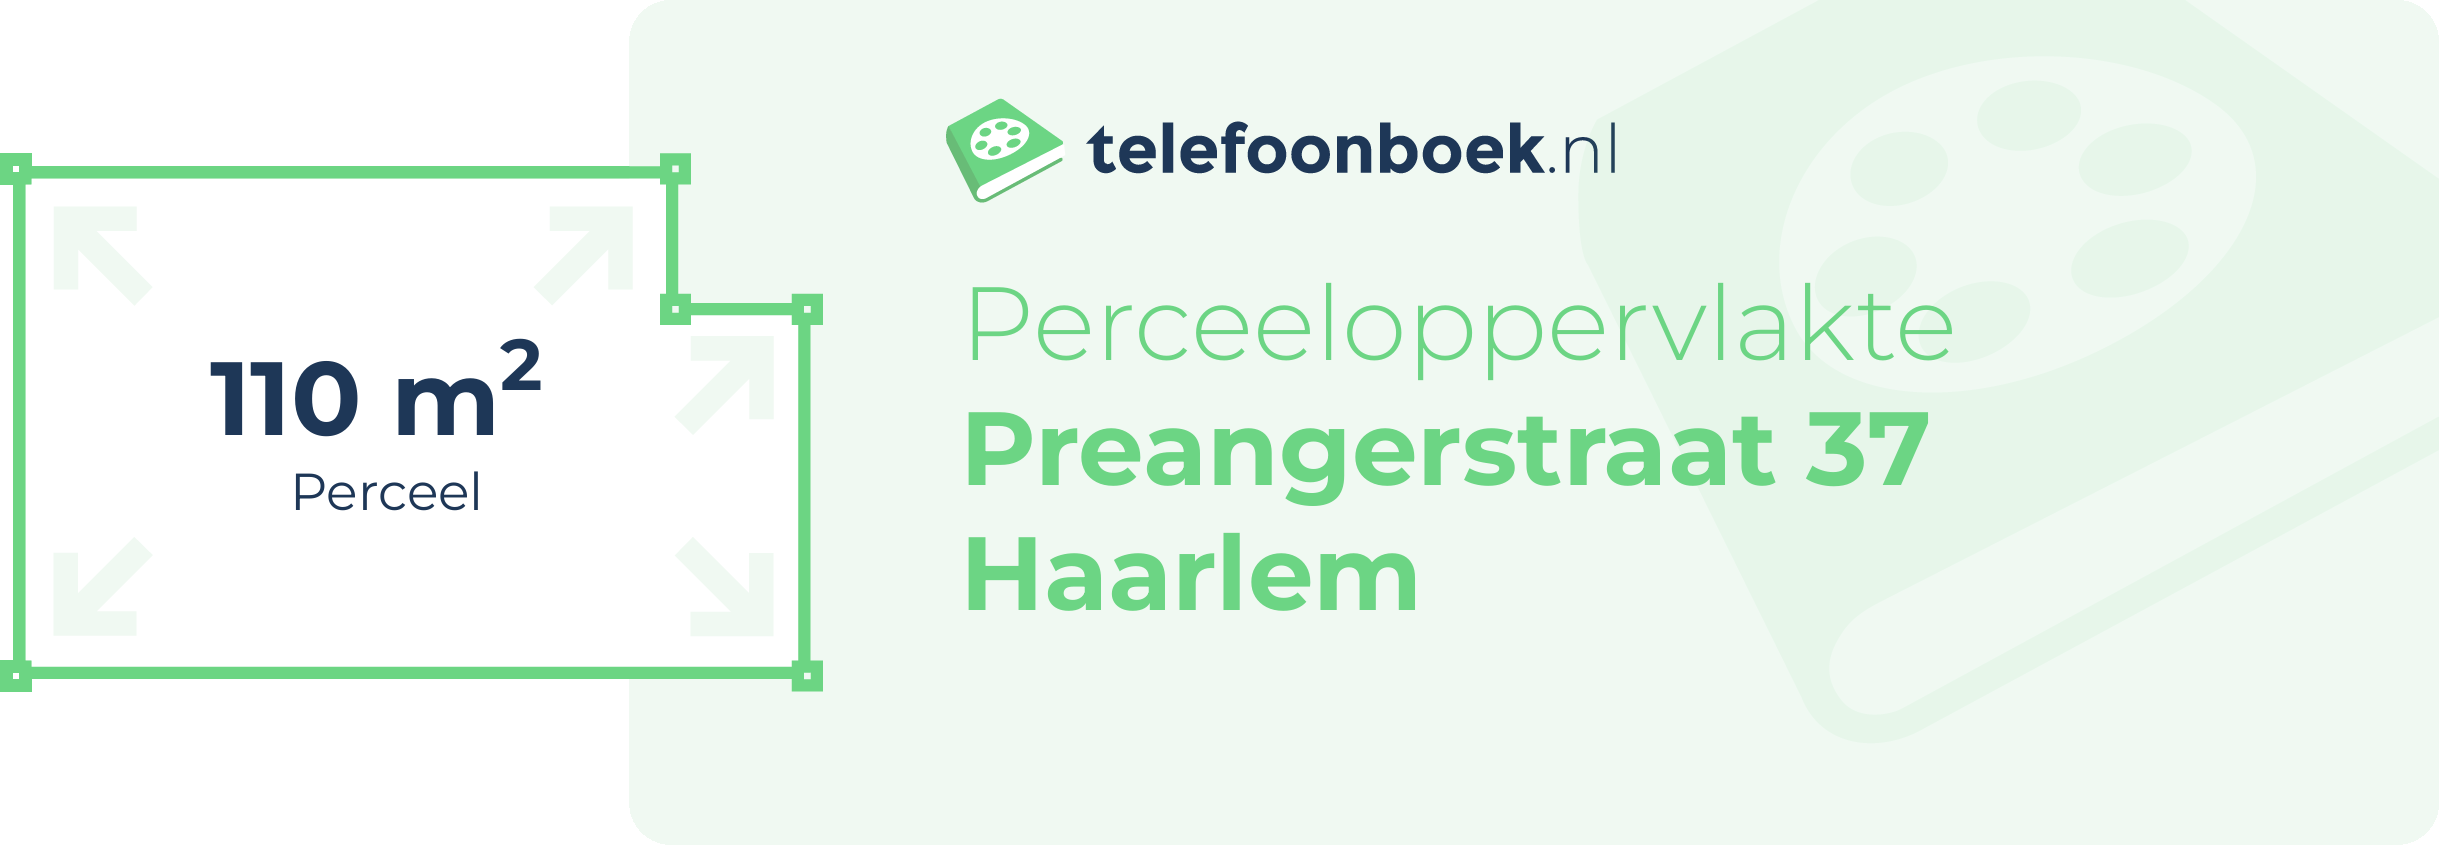 Perceeloppervlakte Preangerstraat 37 Haarlem